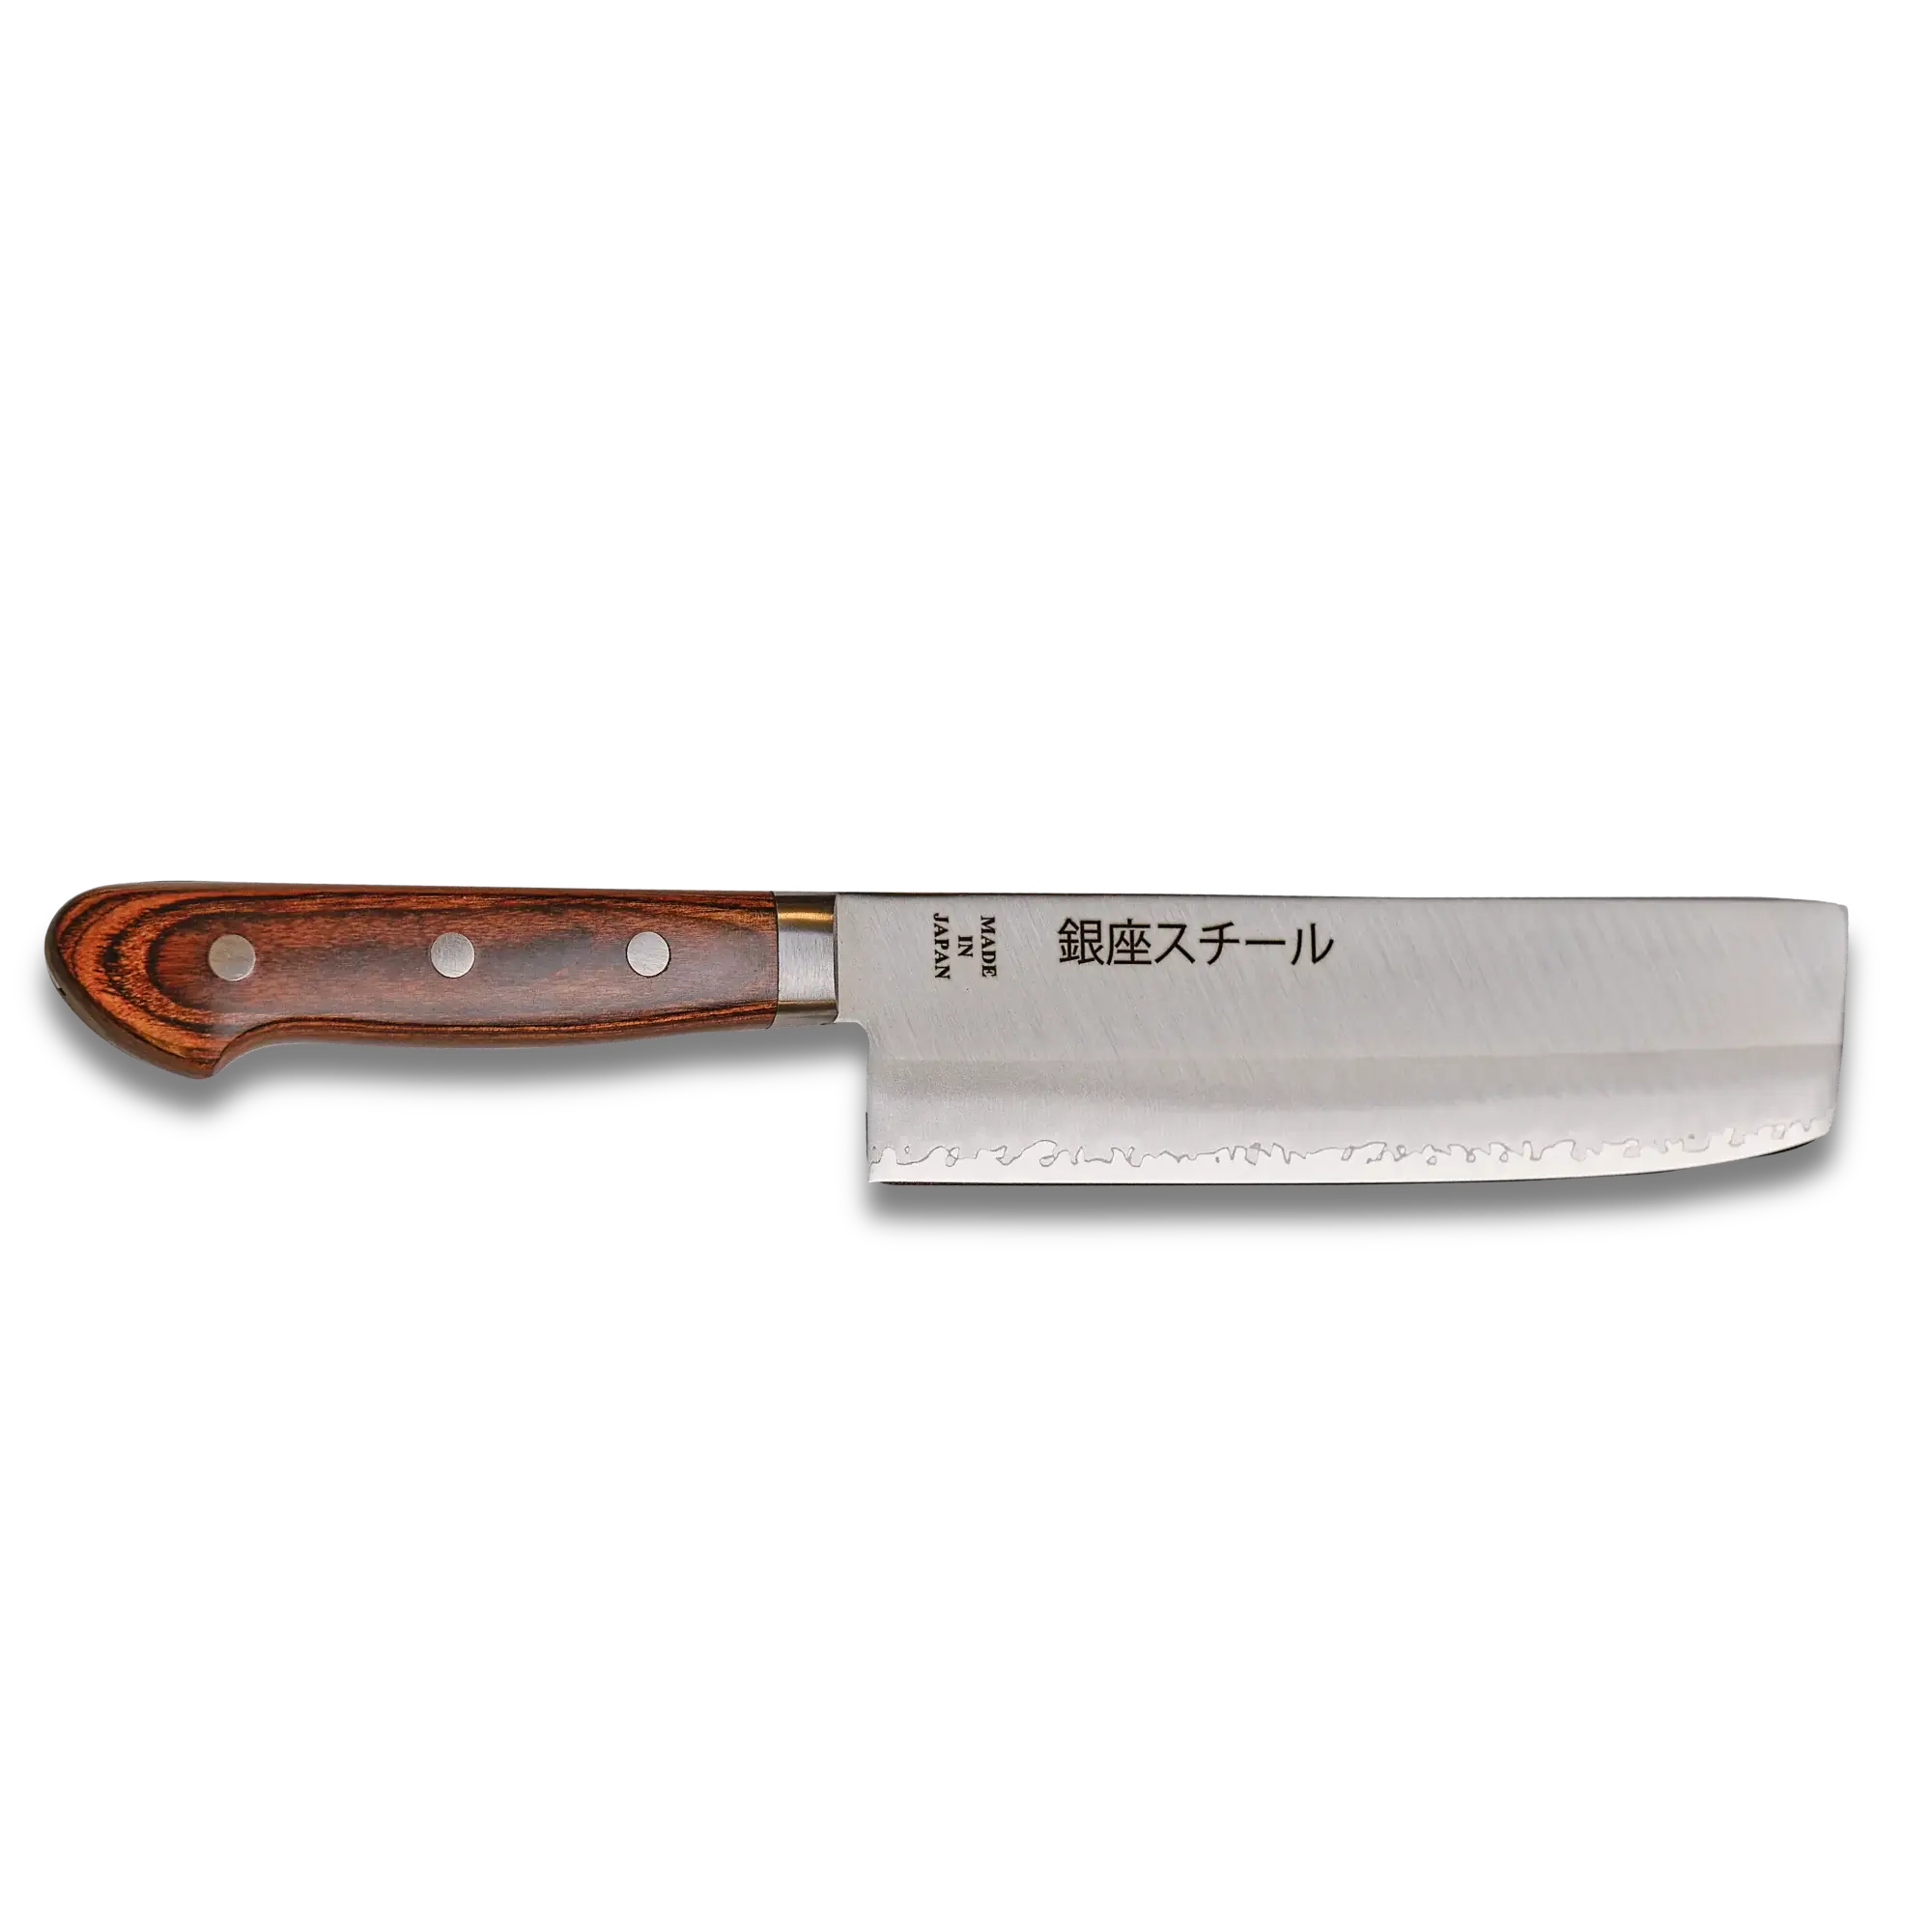 Yamato 165 - Usuba Knife 165mm Blade - Right Hand